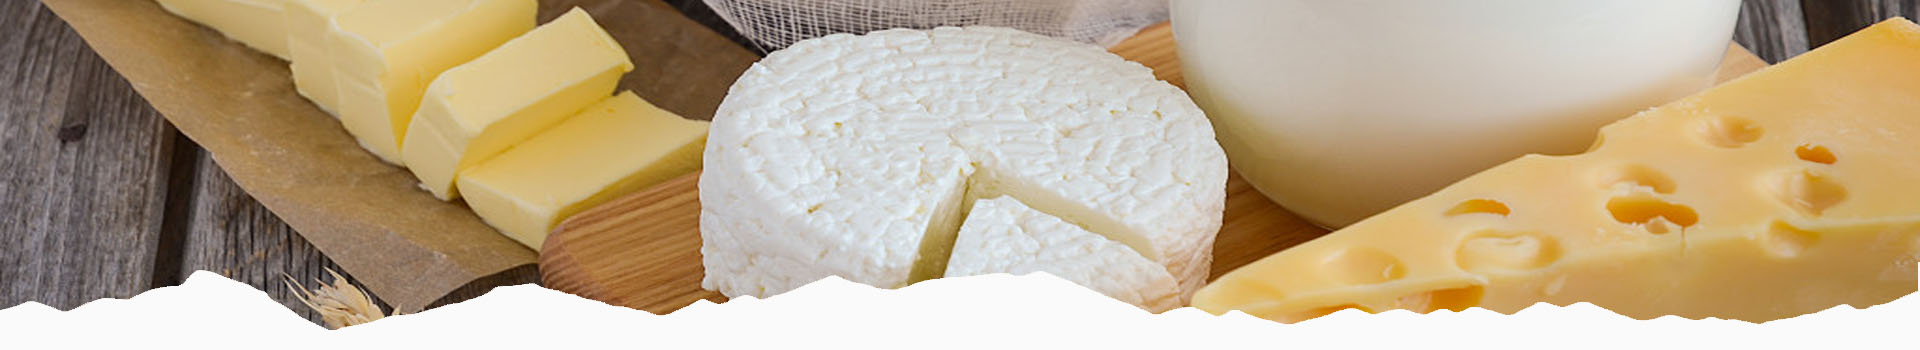 Сыр.jpg